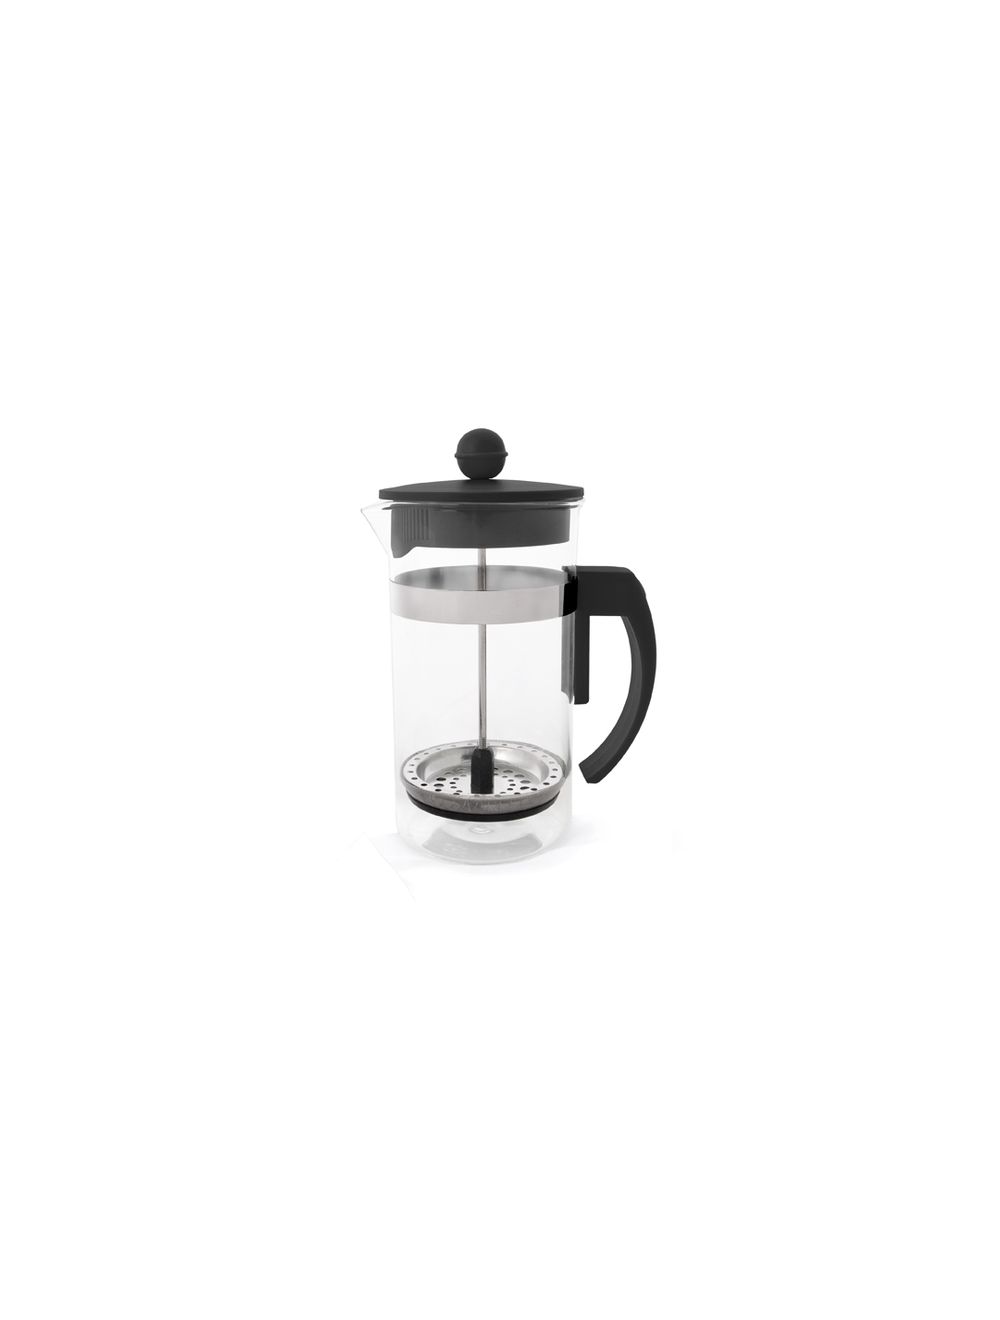 Eetrite Taupe Coffee Plunger, 350ml